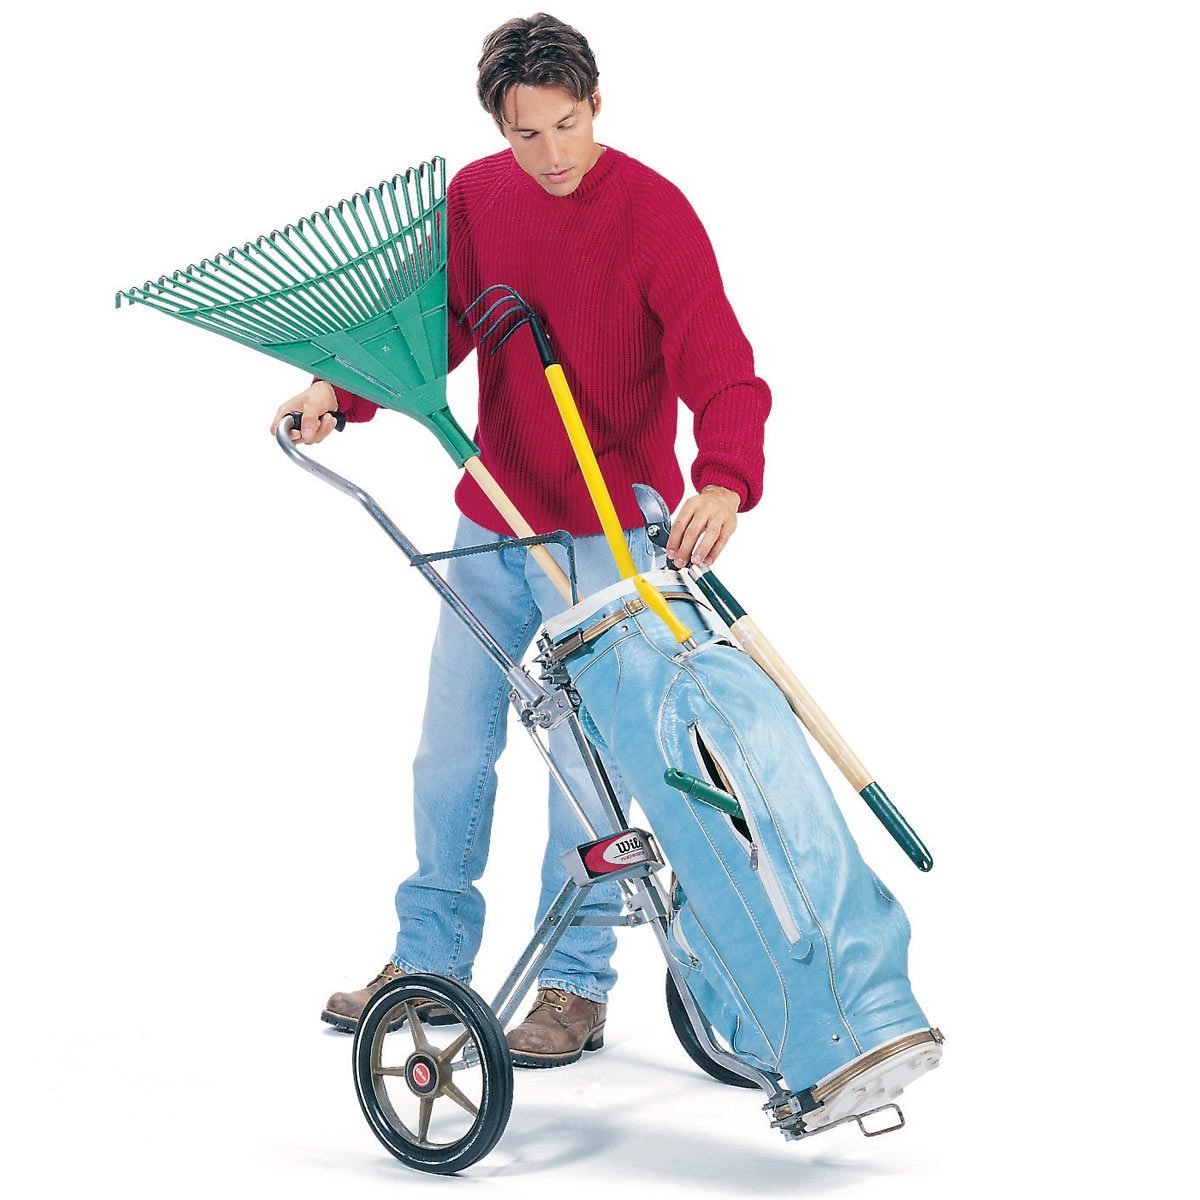 FH98APR_01300001 golf bag lawn tool carrier